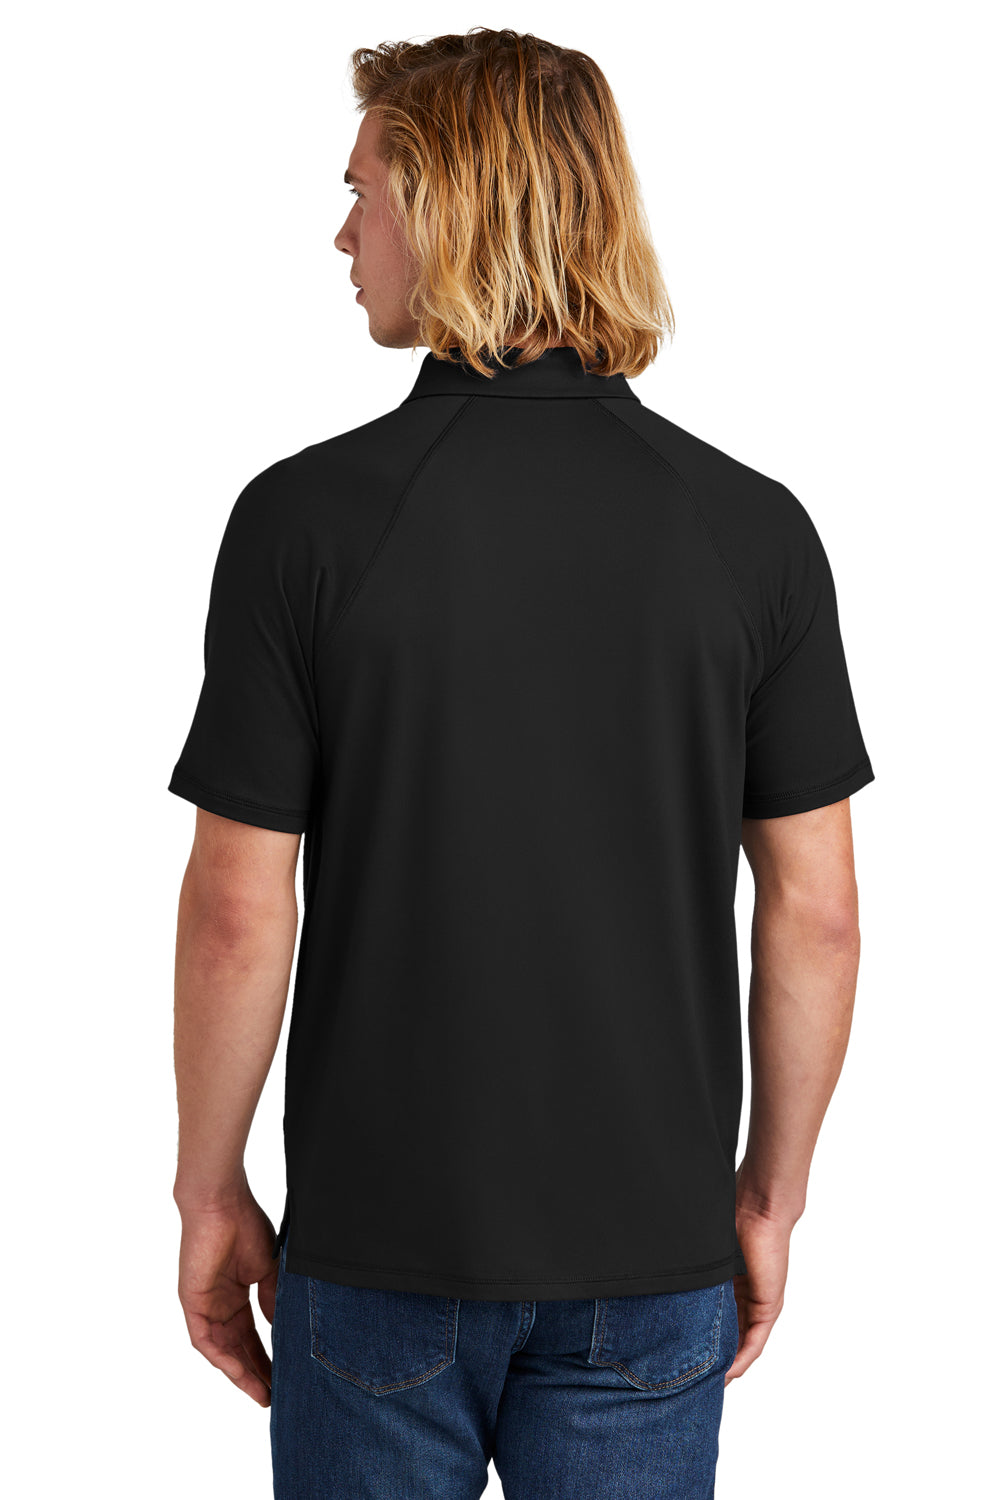 New Era Mens Power Short Sleeve Polo Shirt Black Back